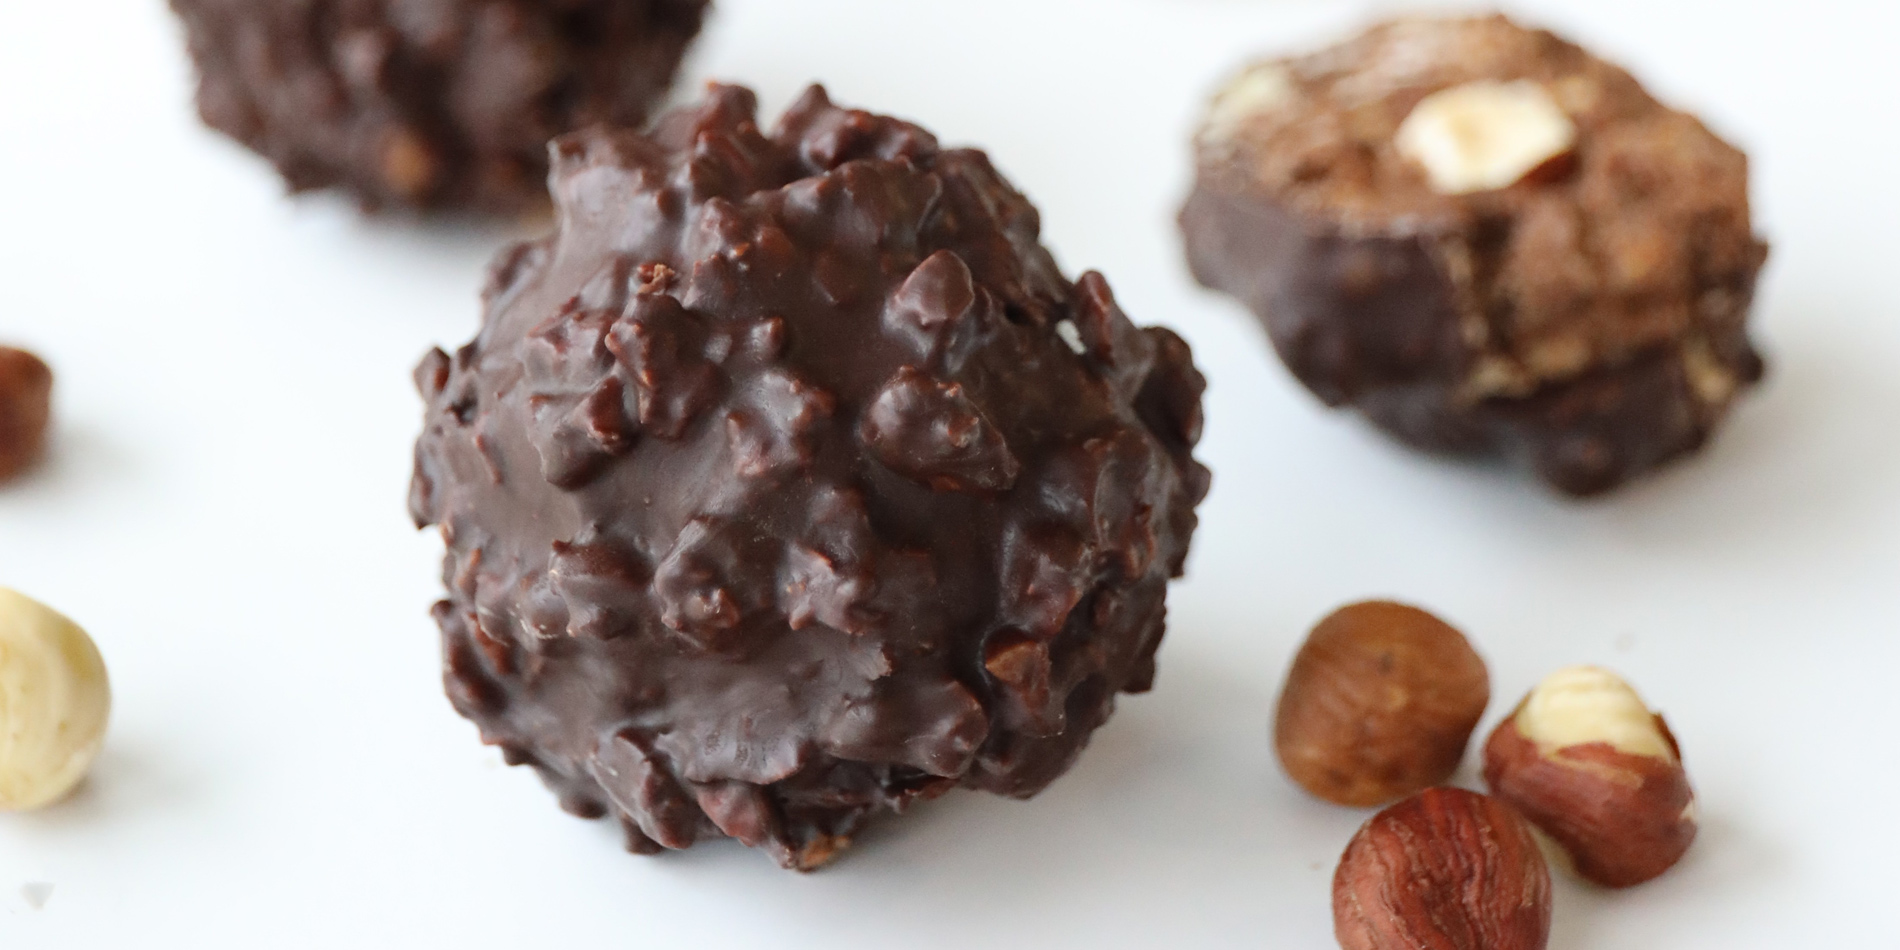 Chocolate Hazelnut Truffles on a white background with hazelnuts with blurred Justin's peanut butter jar